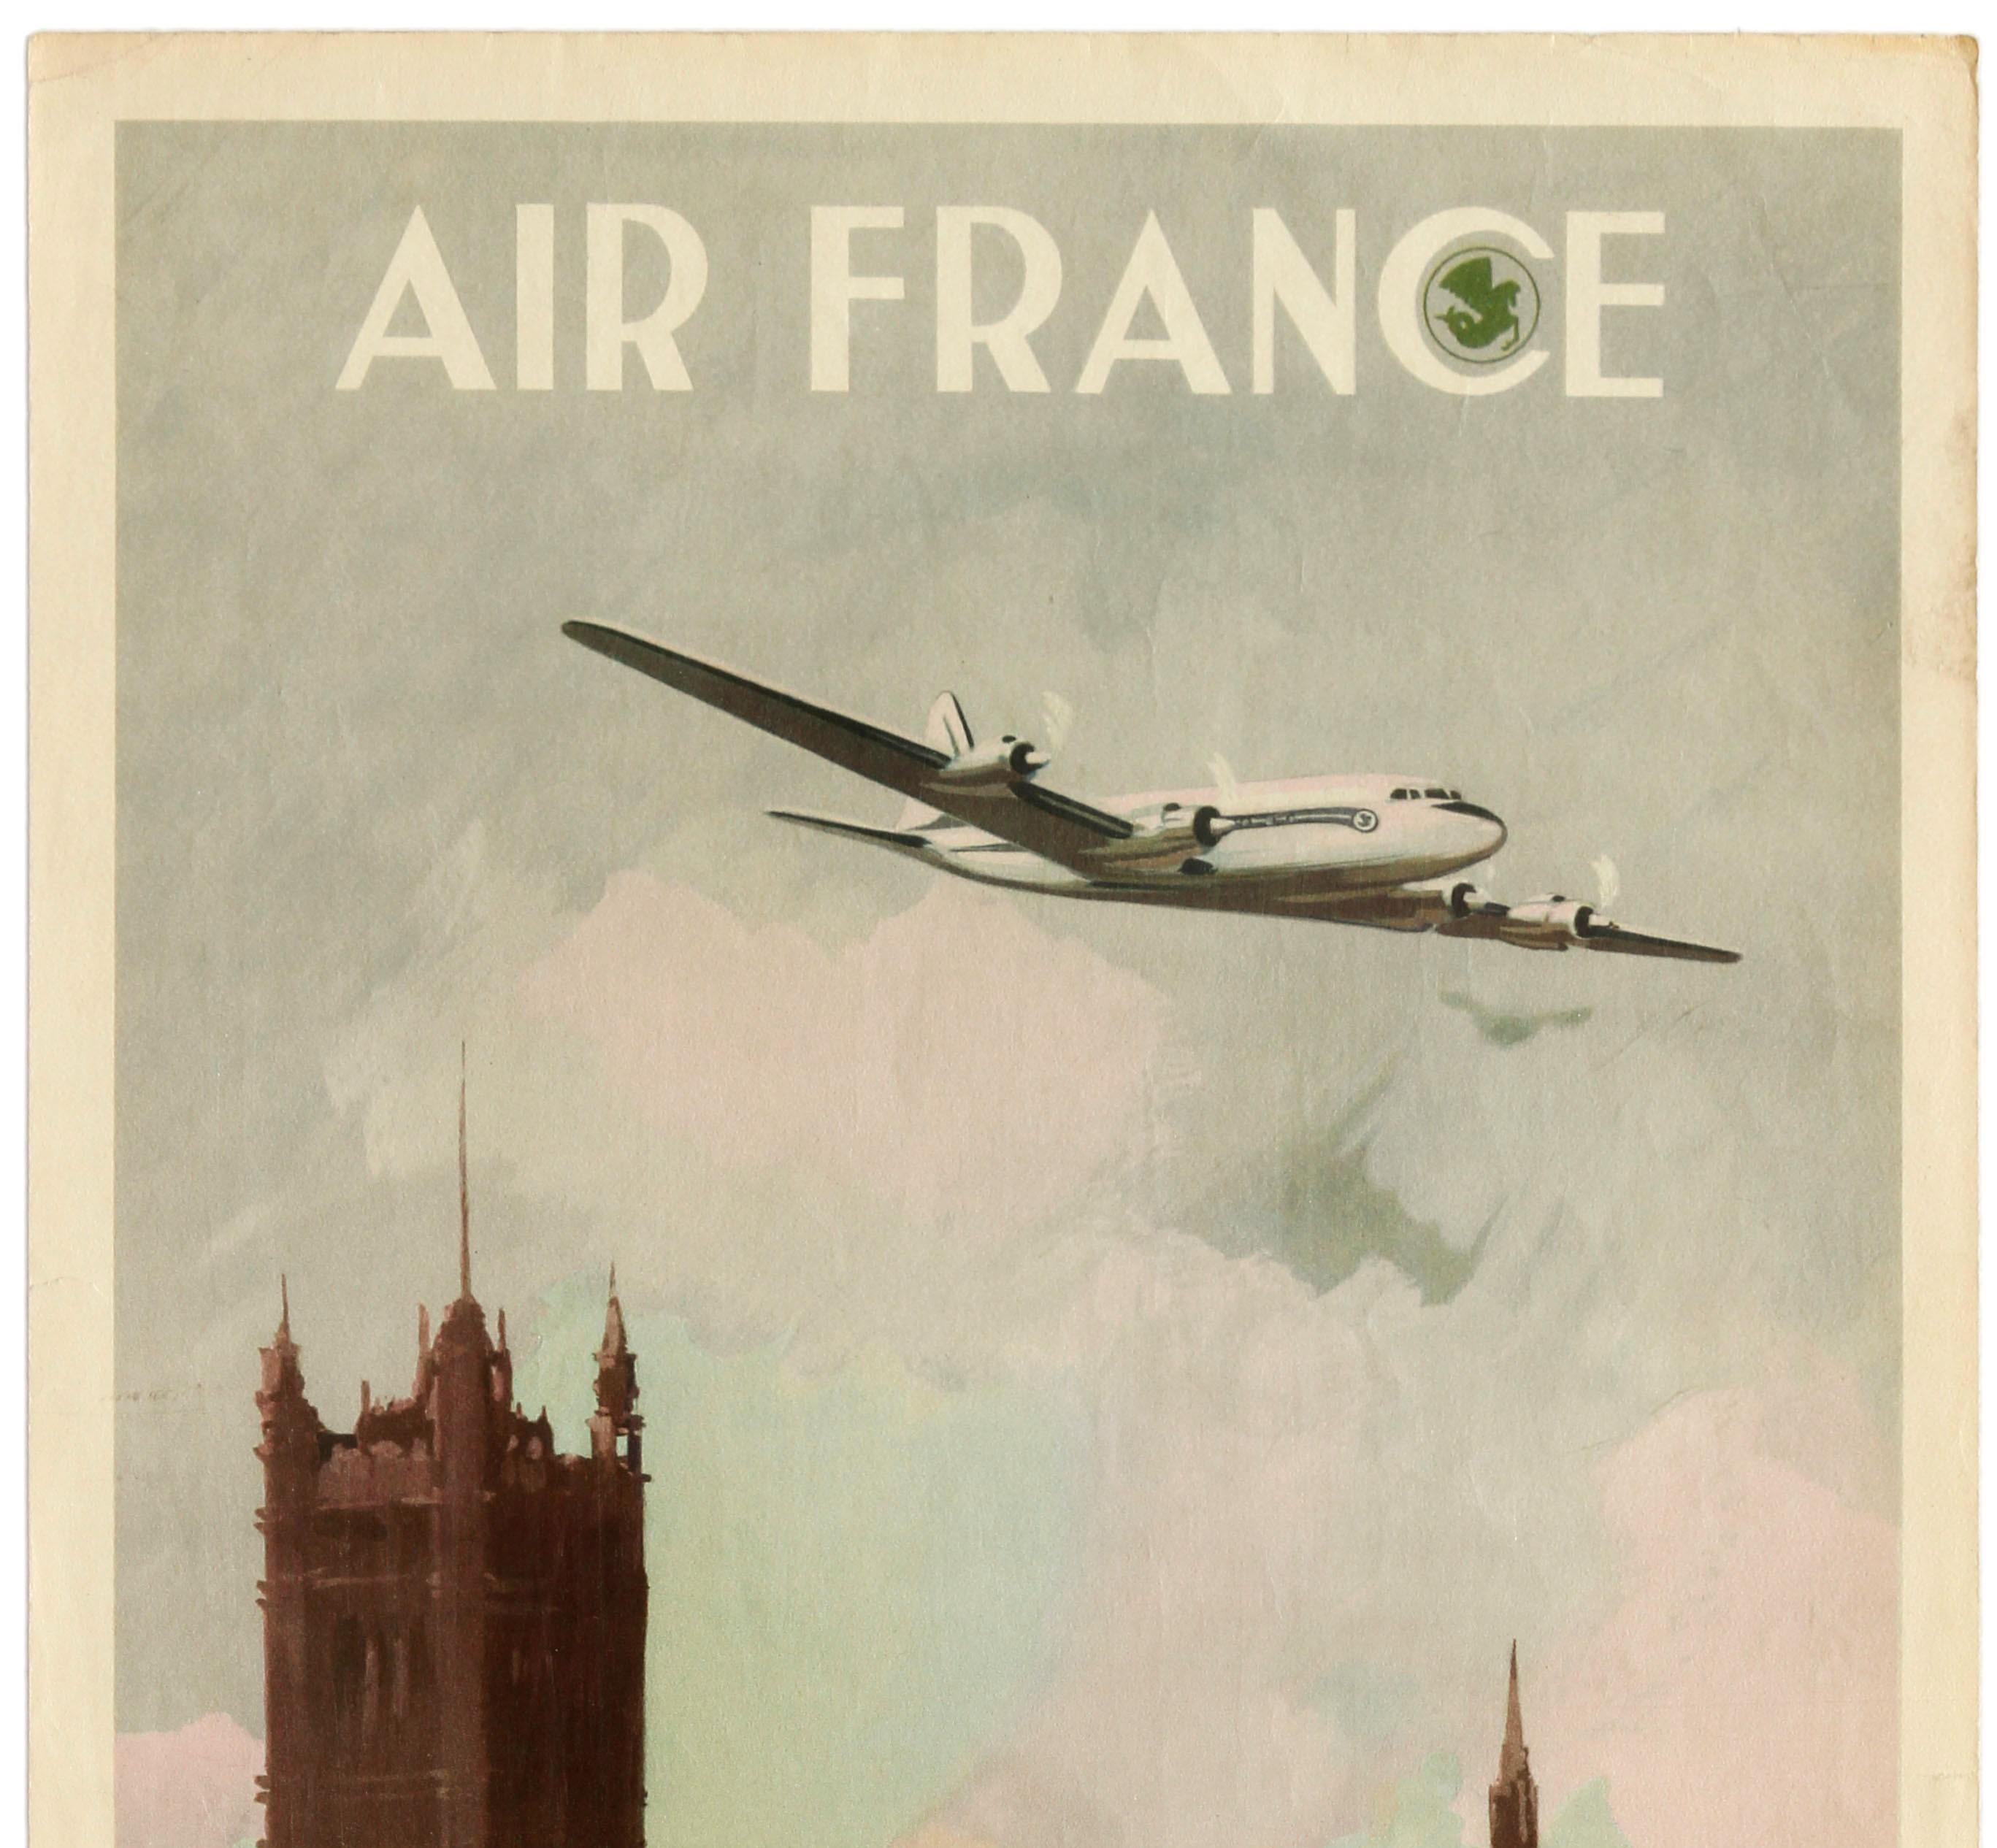 Original Vintage Poster Air France Angleterre England London Travel Art Affiche - Print by Vincent Guerra